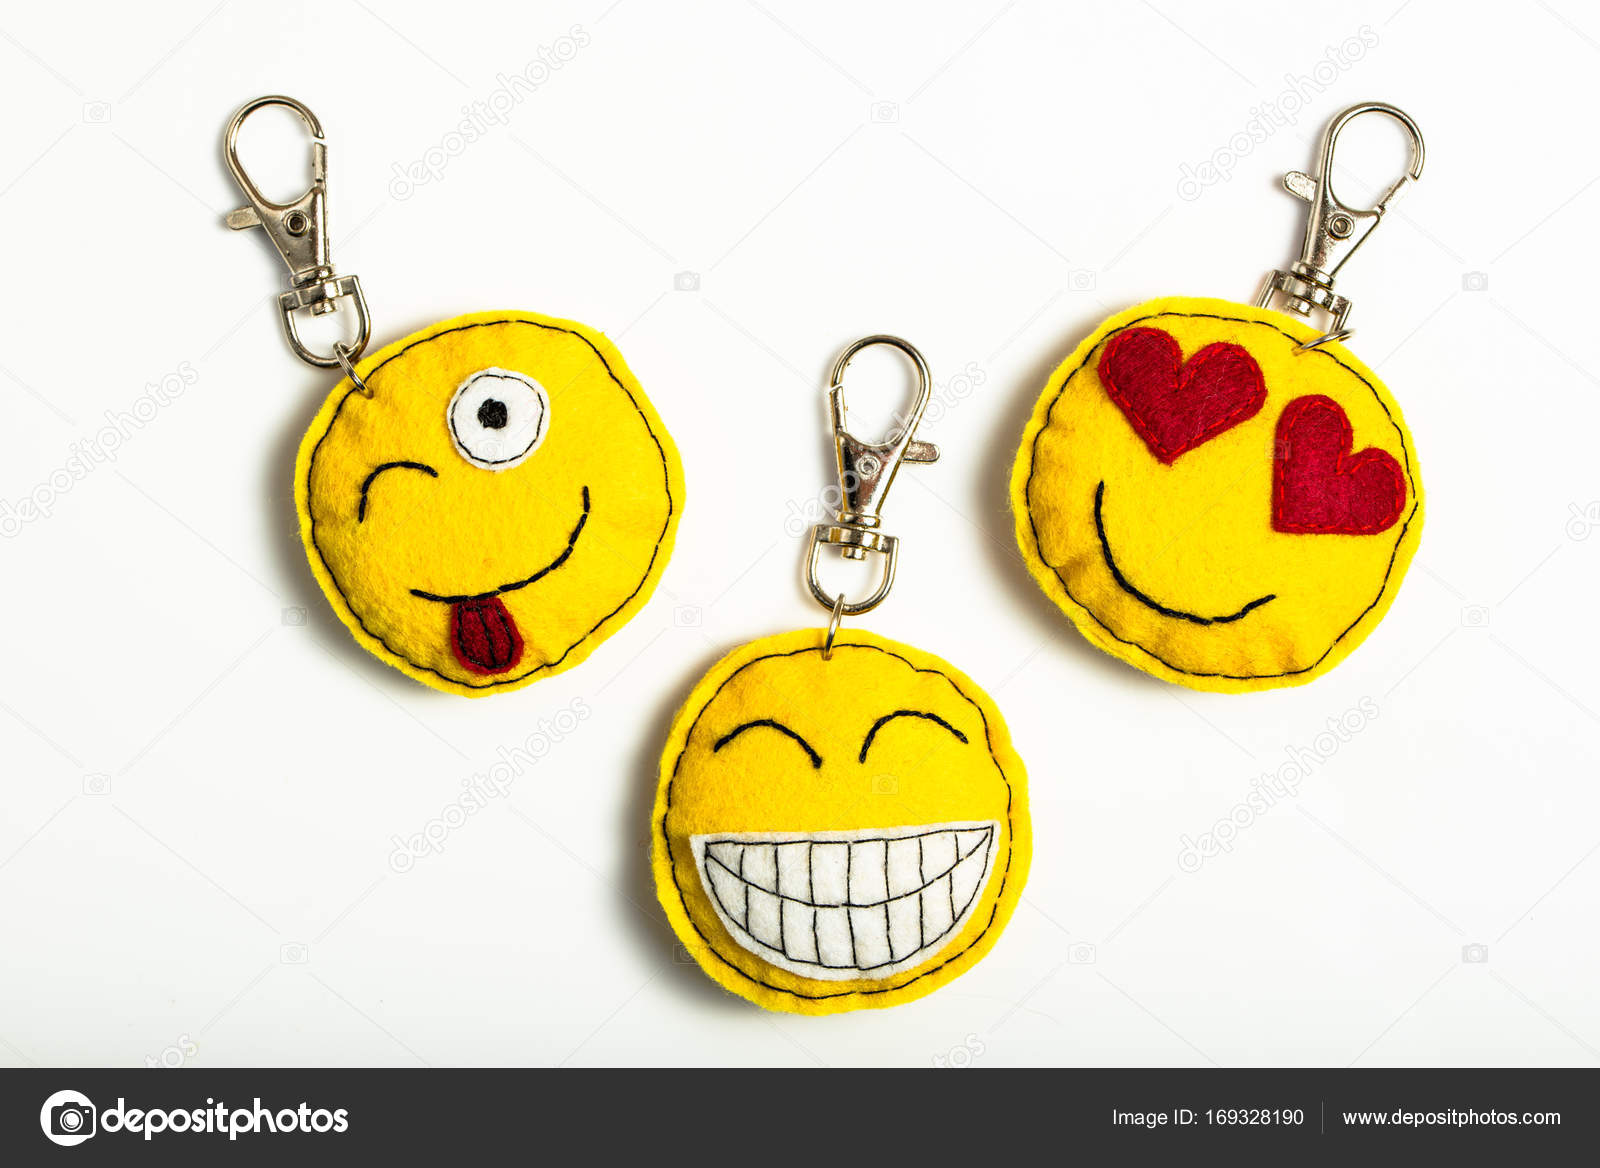 Emoji Emotion Rubber Keyring Funny Smiley Faces Keychain Keyring New Freepost uk